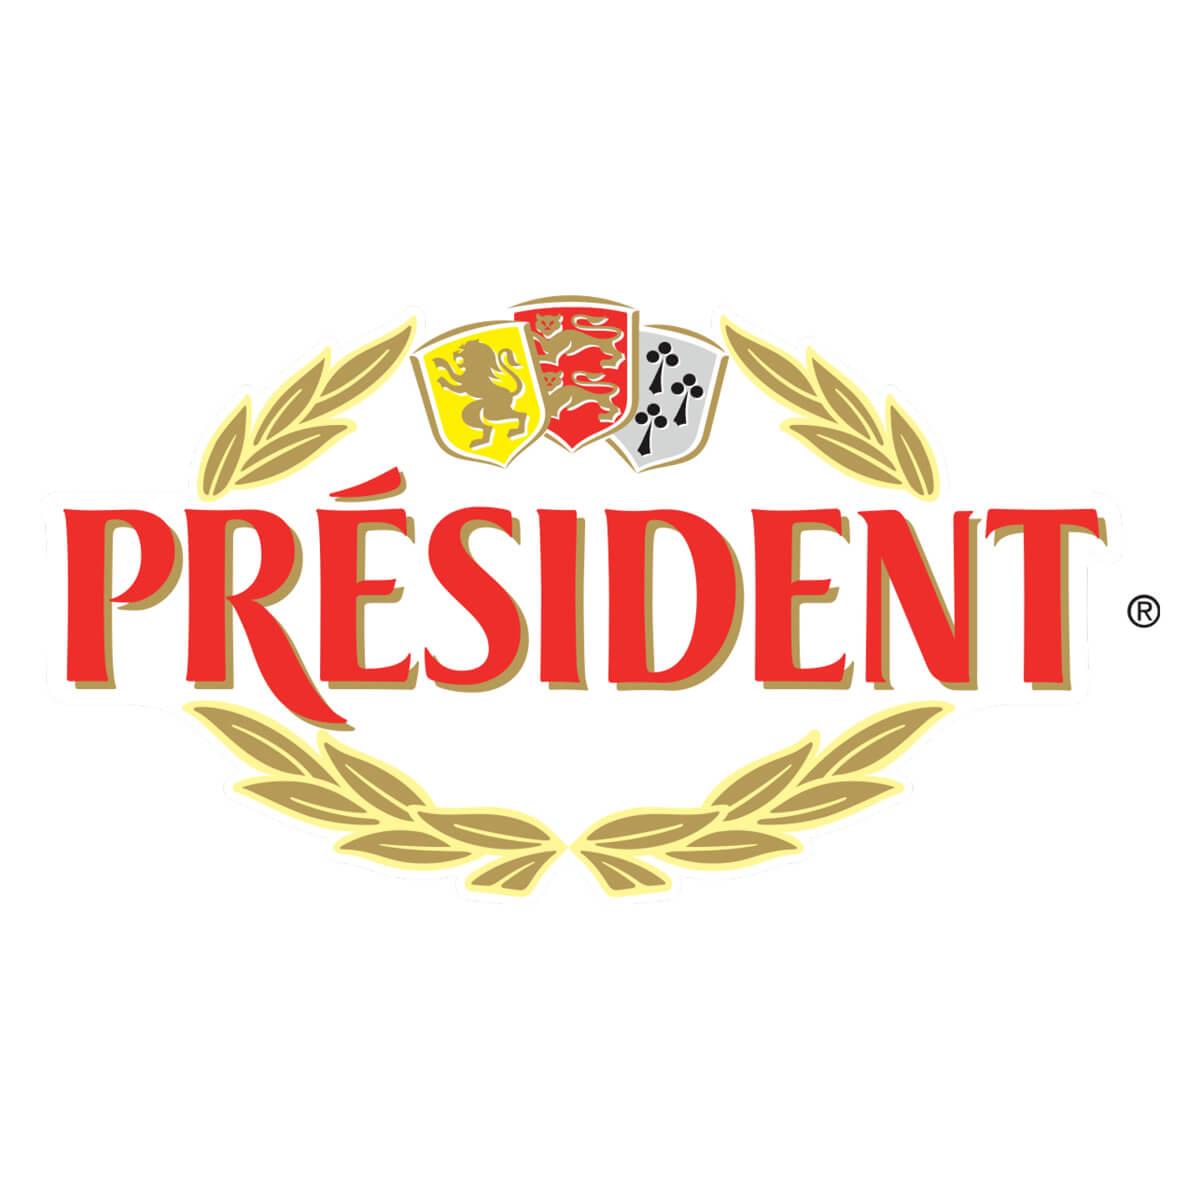 GGO.ae President Raclette Cheese, France - 1x1kg